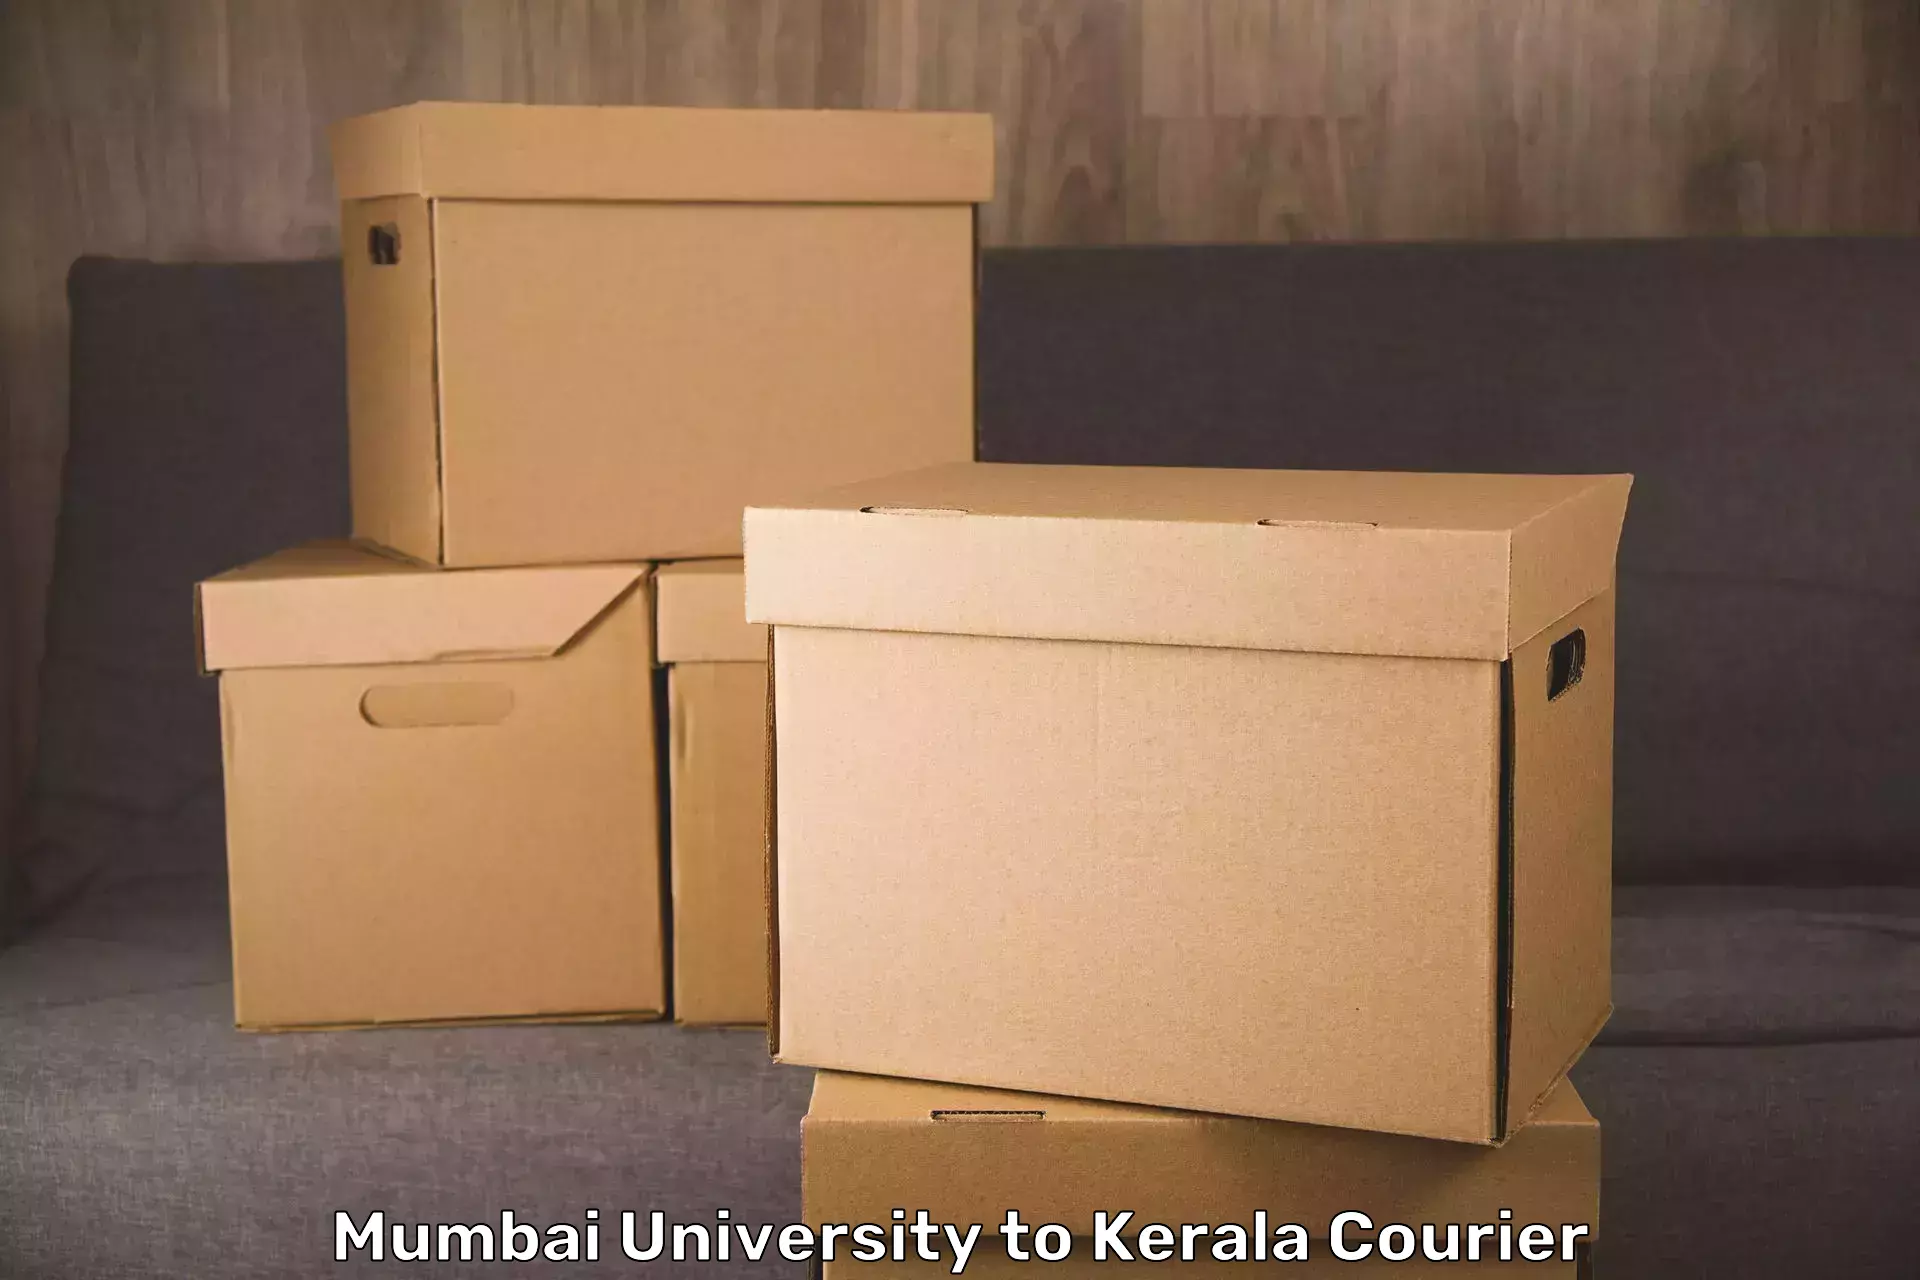 Emergency baggage service Mumbai University to Guruvayur